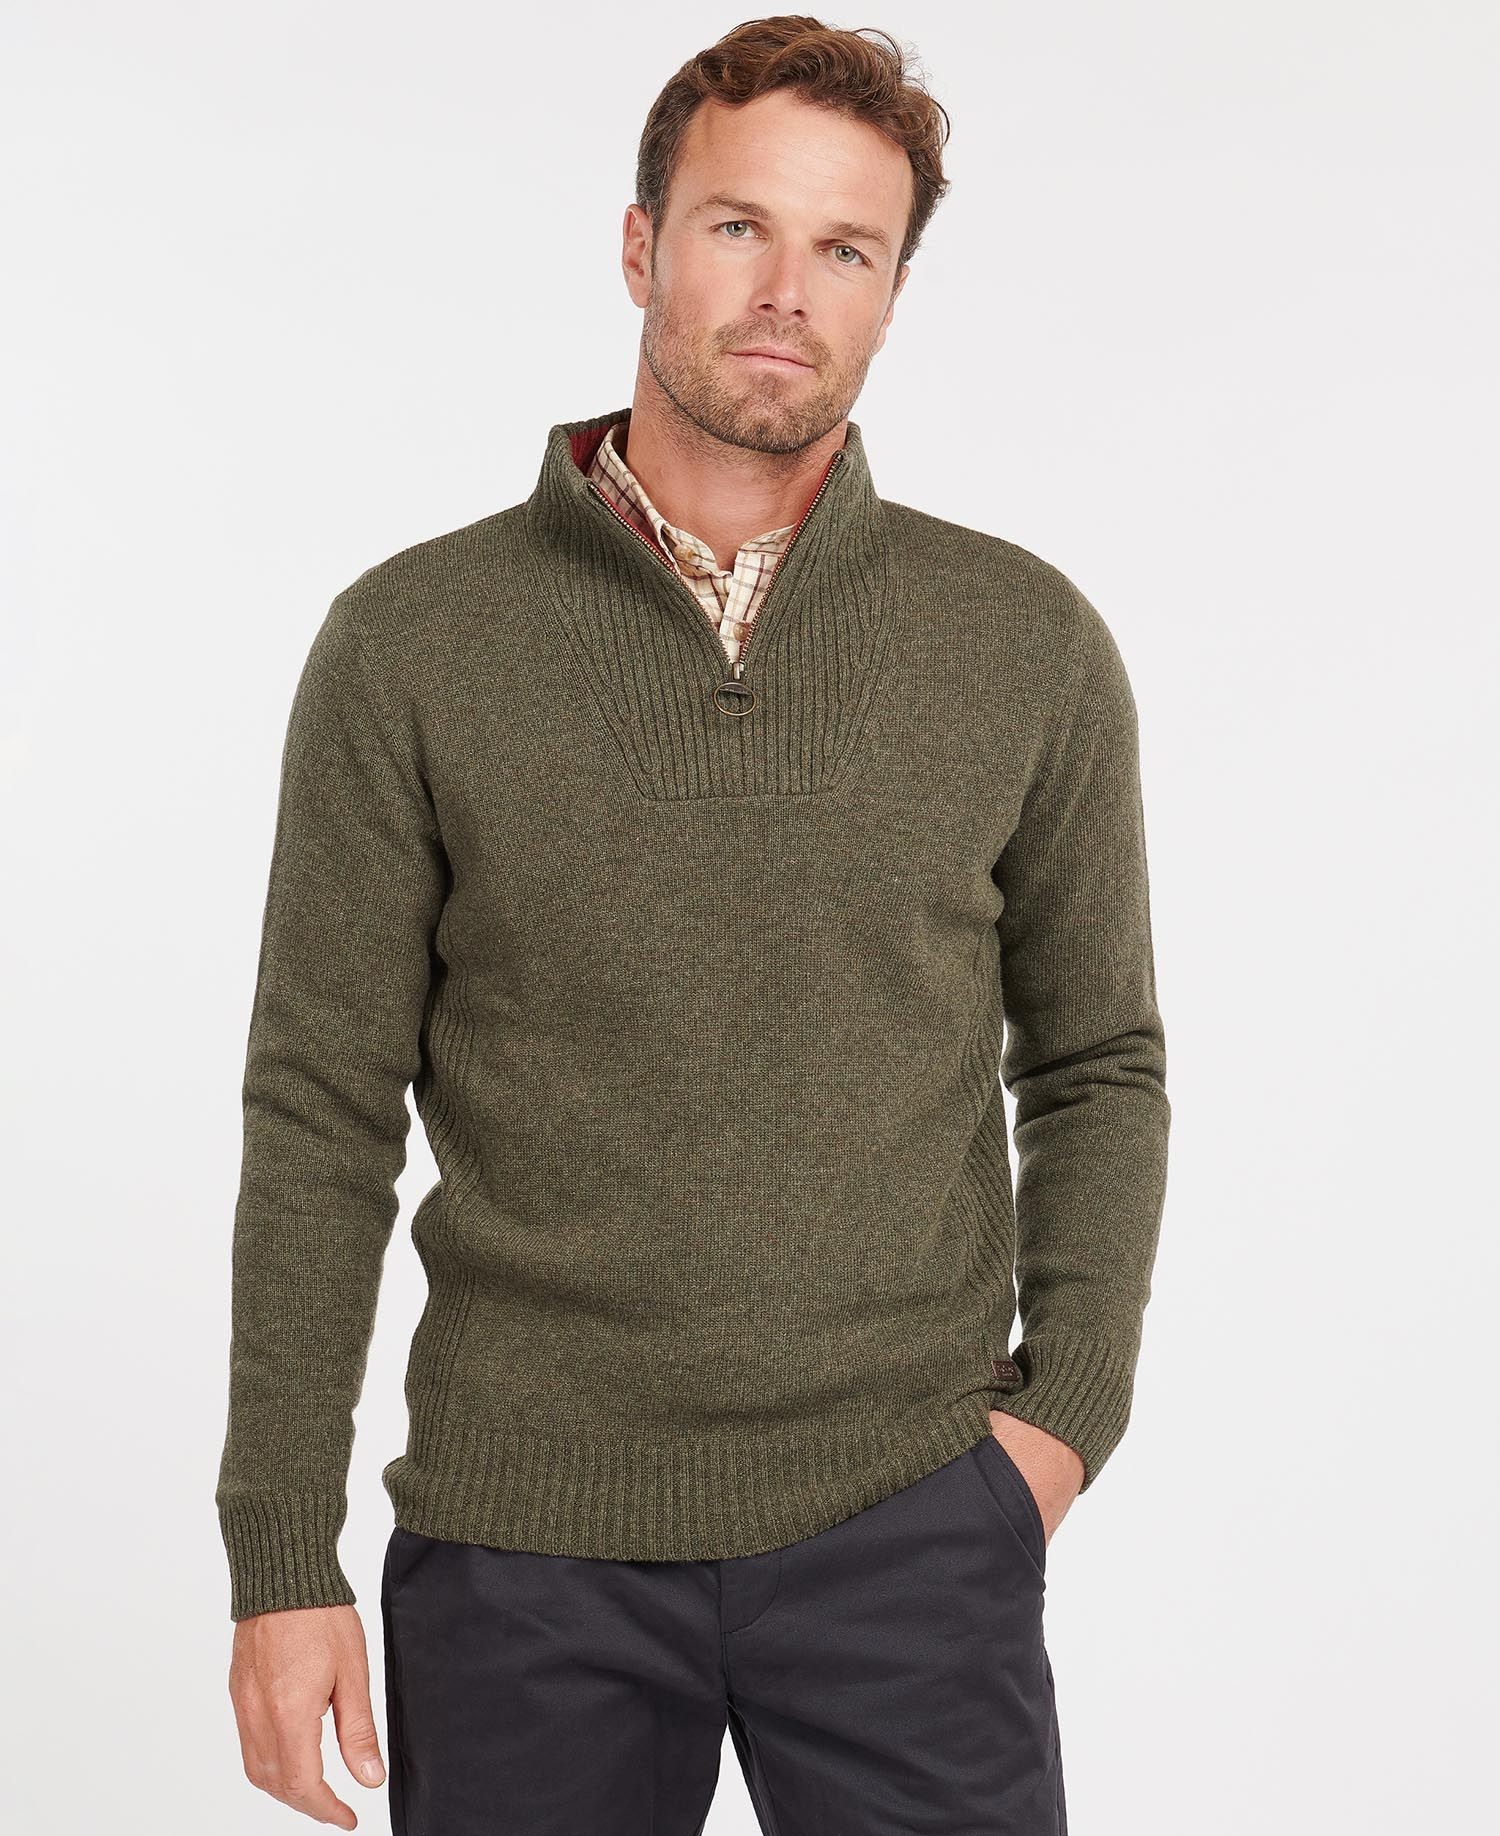 Barbour M's Nelson Essential Half-Zip Sweater: Angler's Lane Virginia ...